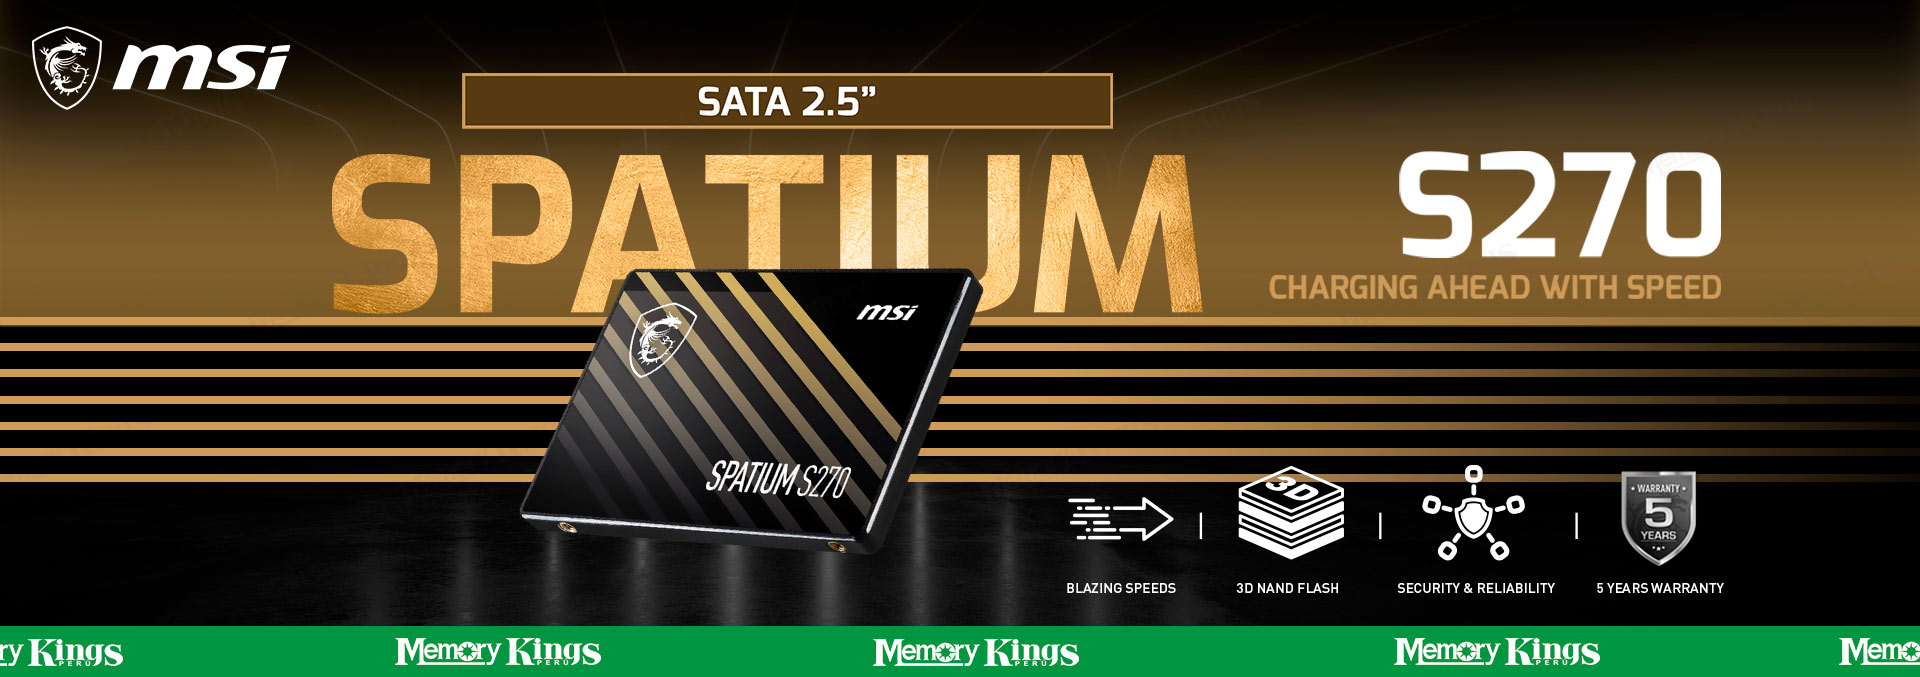 033526 - UNIDAD SSD 2.5 SATA 240GB MSI SPATIUM S270